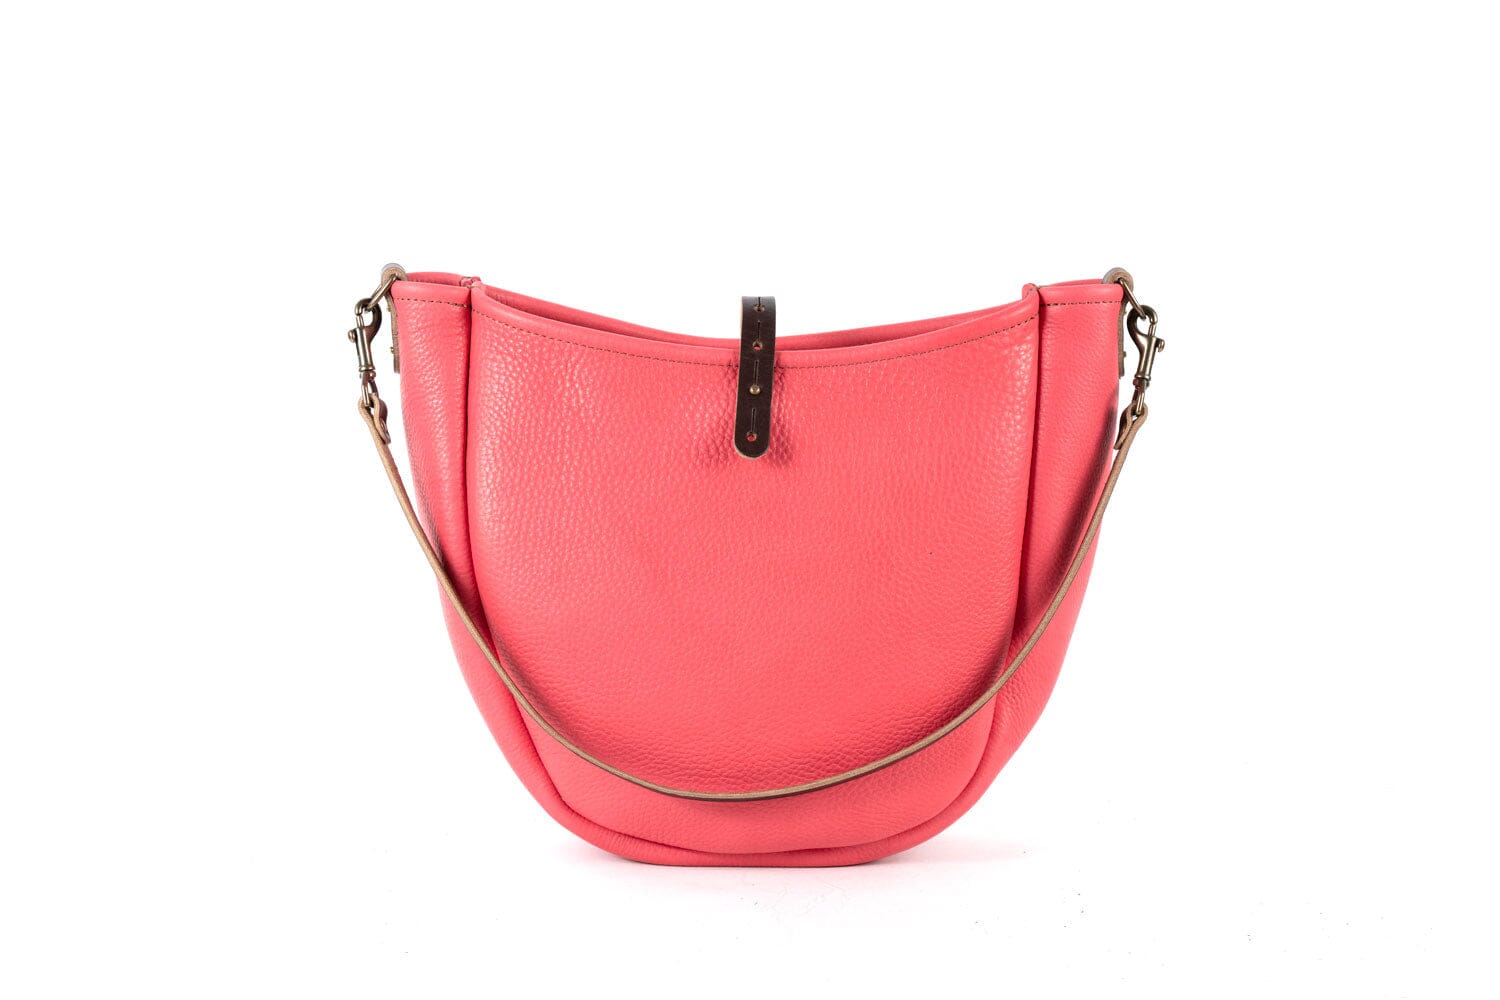 Celeste Leather Hobo Bag - Medium - Pink